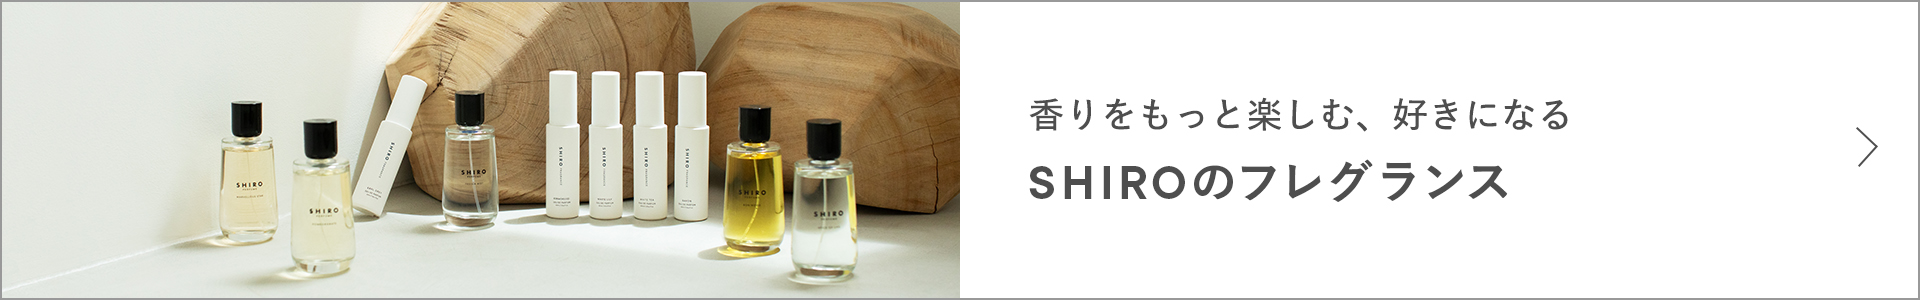 SHIRO PERFUME SPICES AND TEASE | SHIROオフィシャルサイト